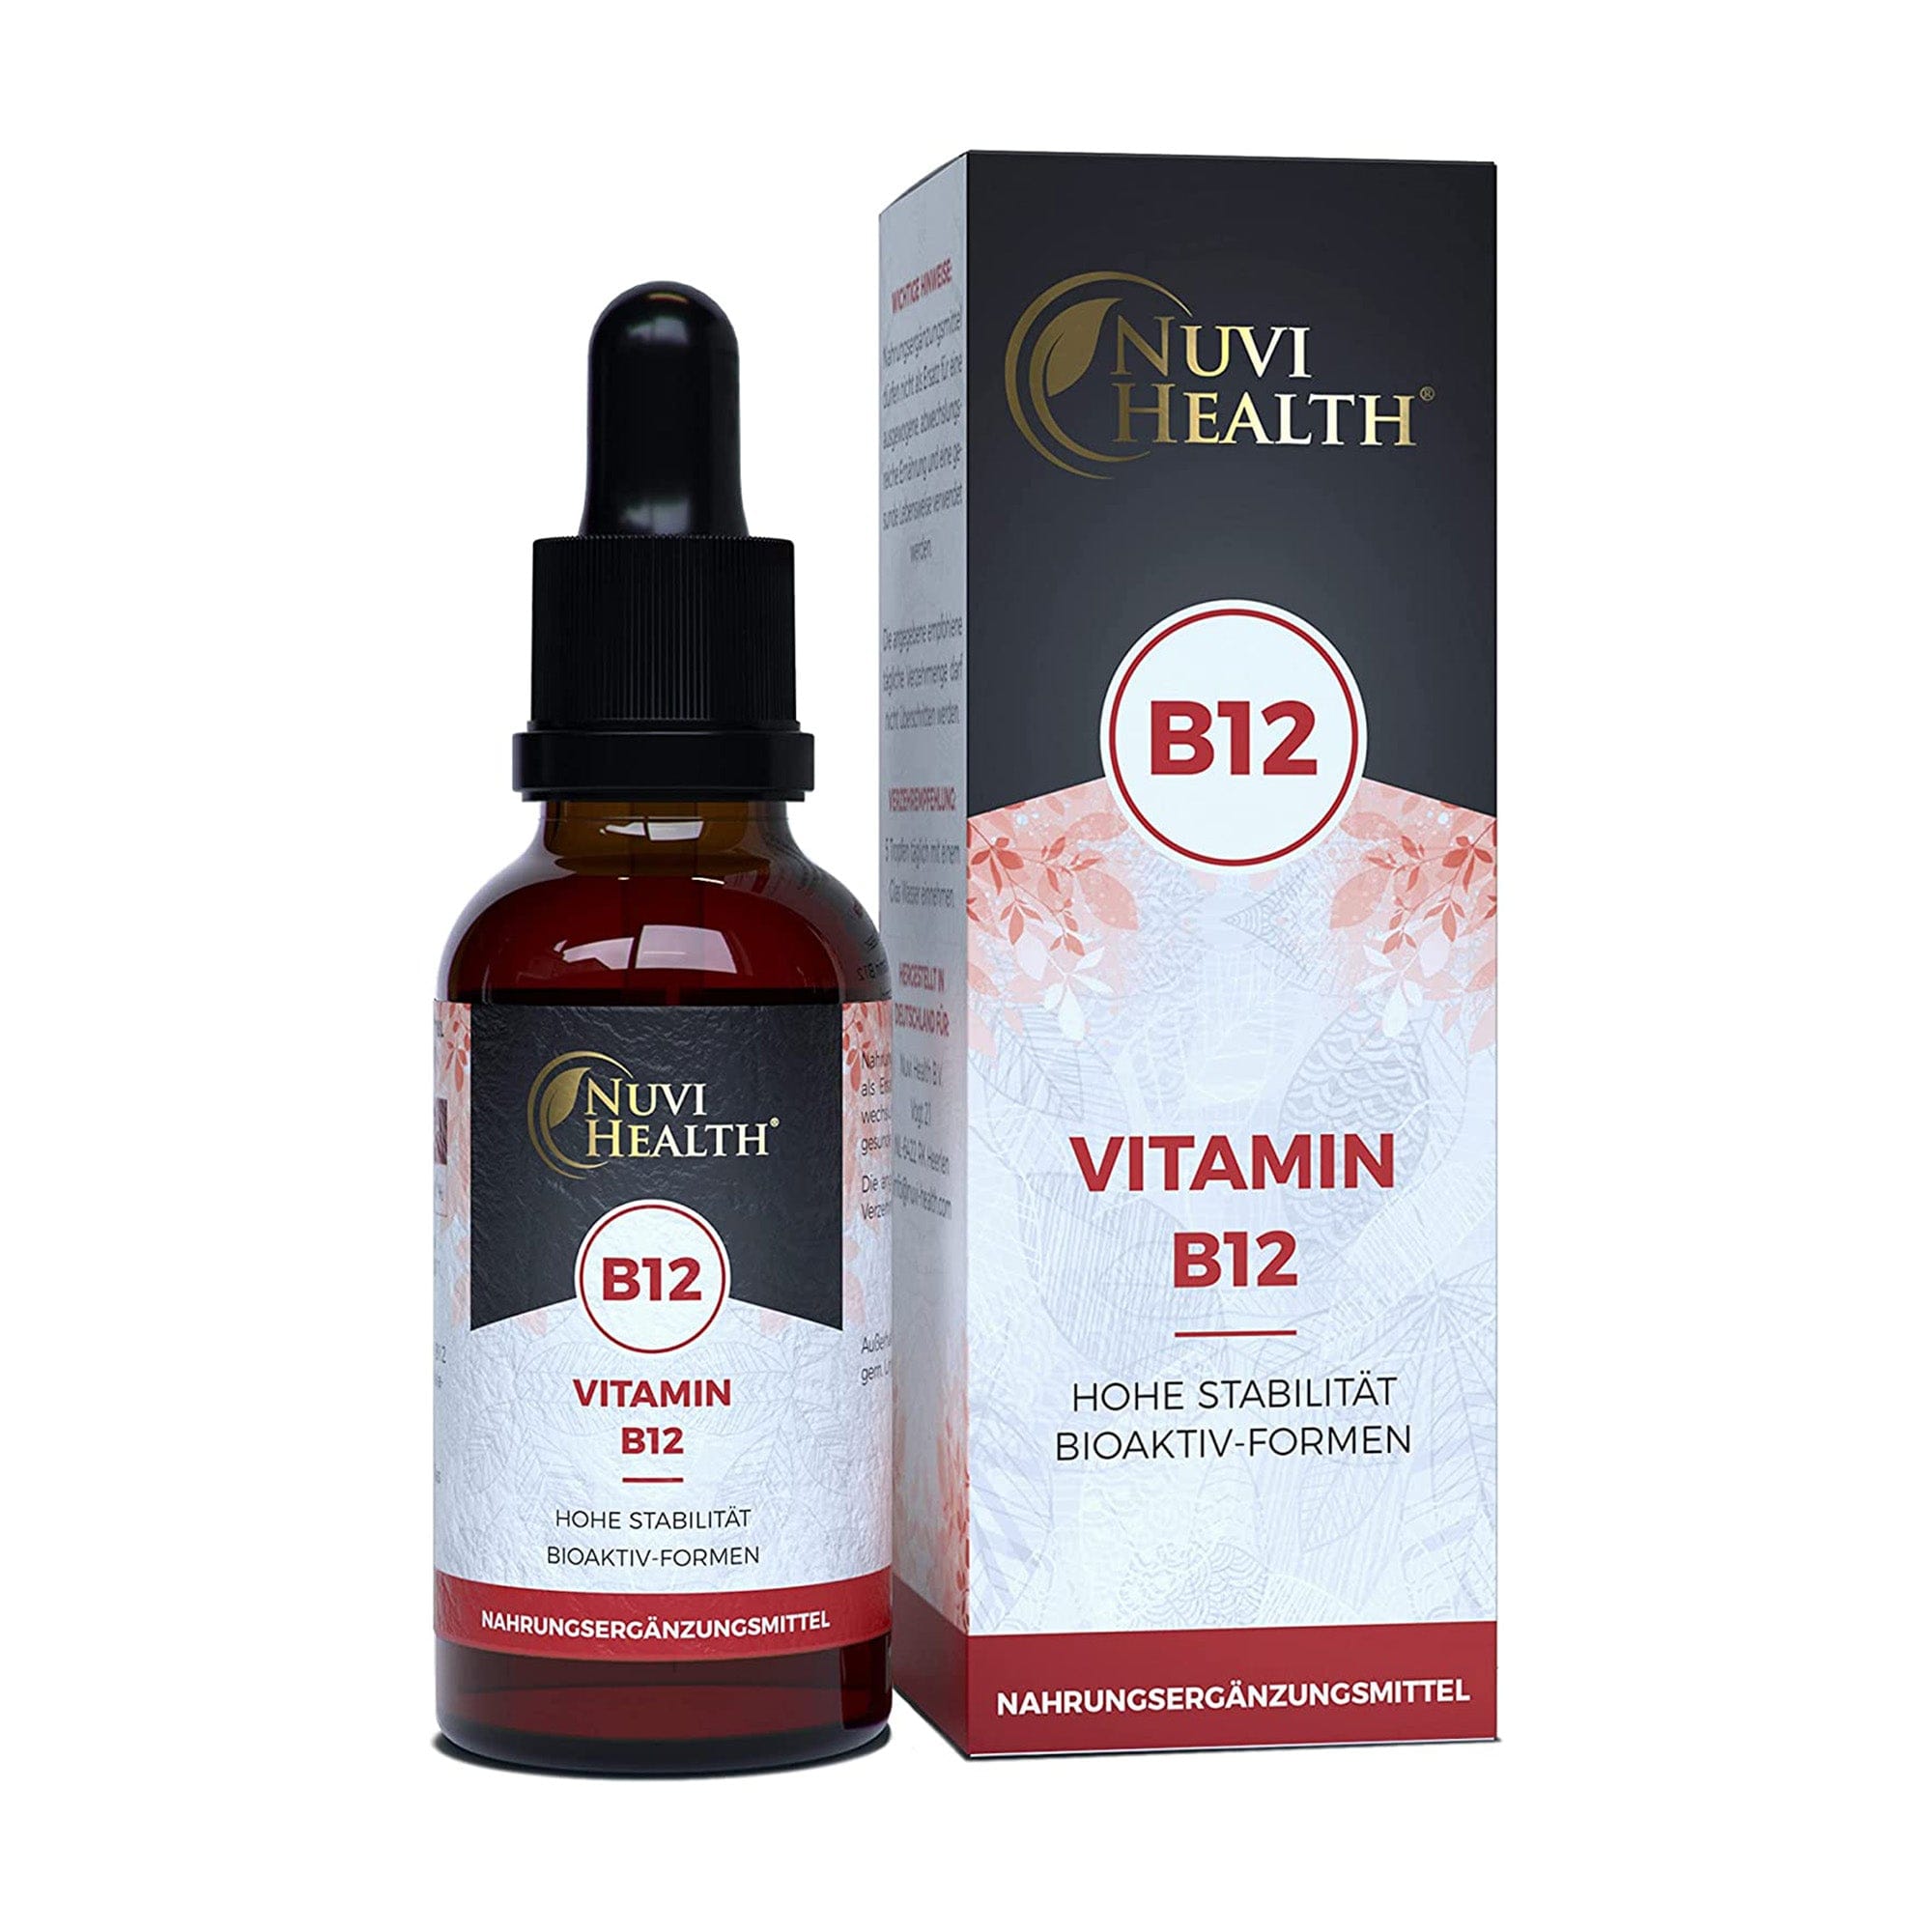 Nuci Health vitamine B12 druppels